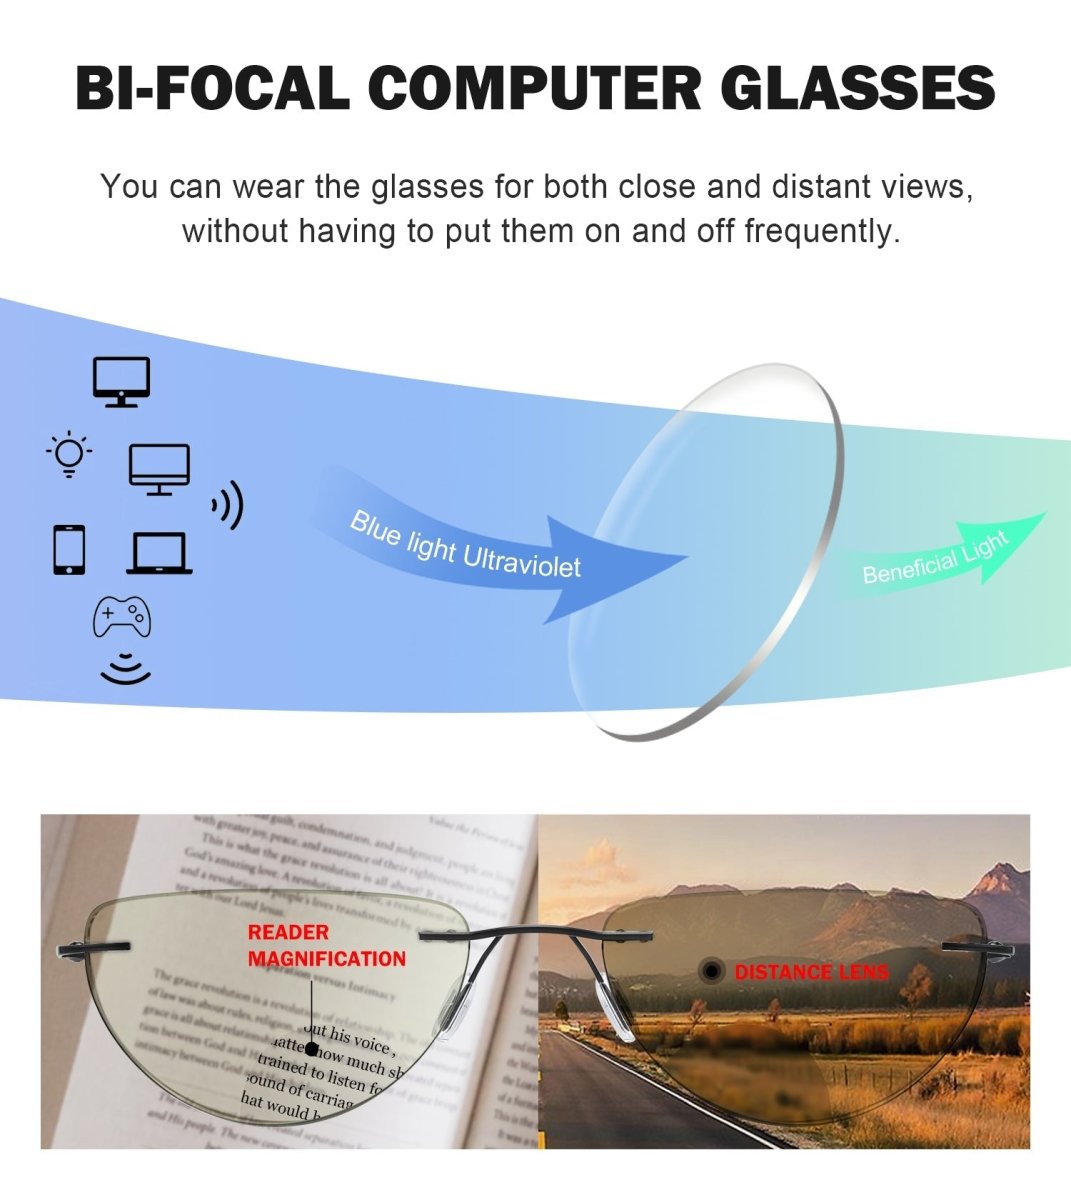 Bifocal Computer Reading Glasses Effect